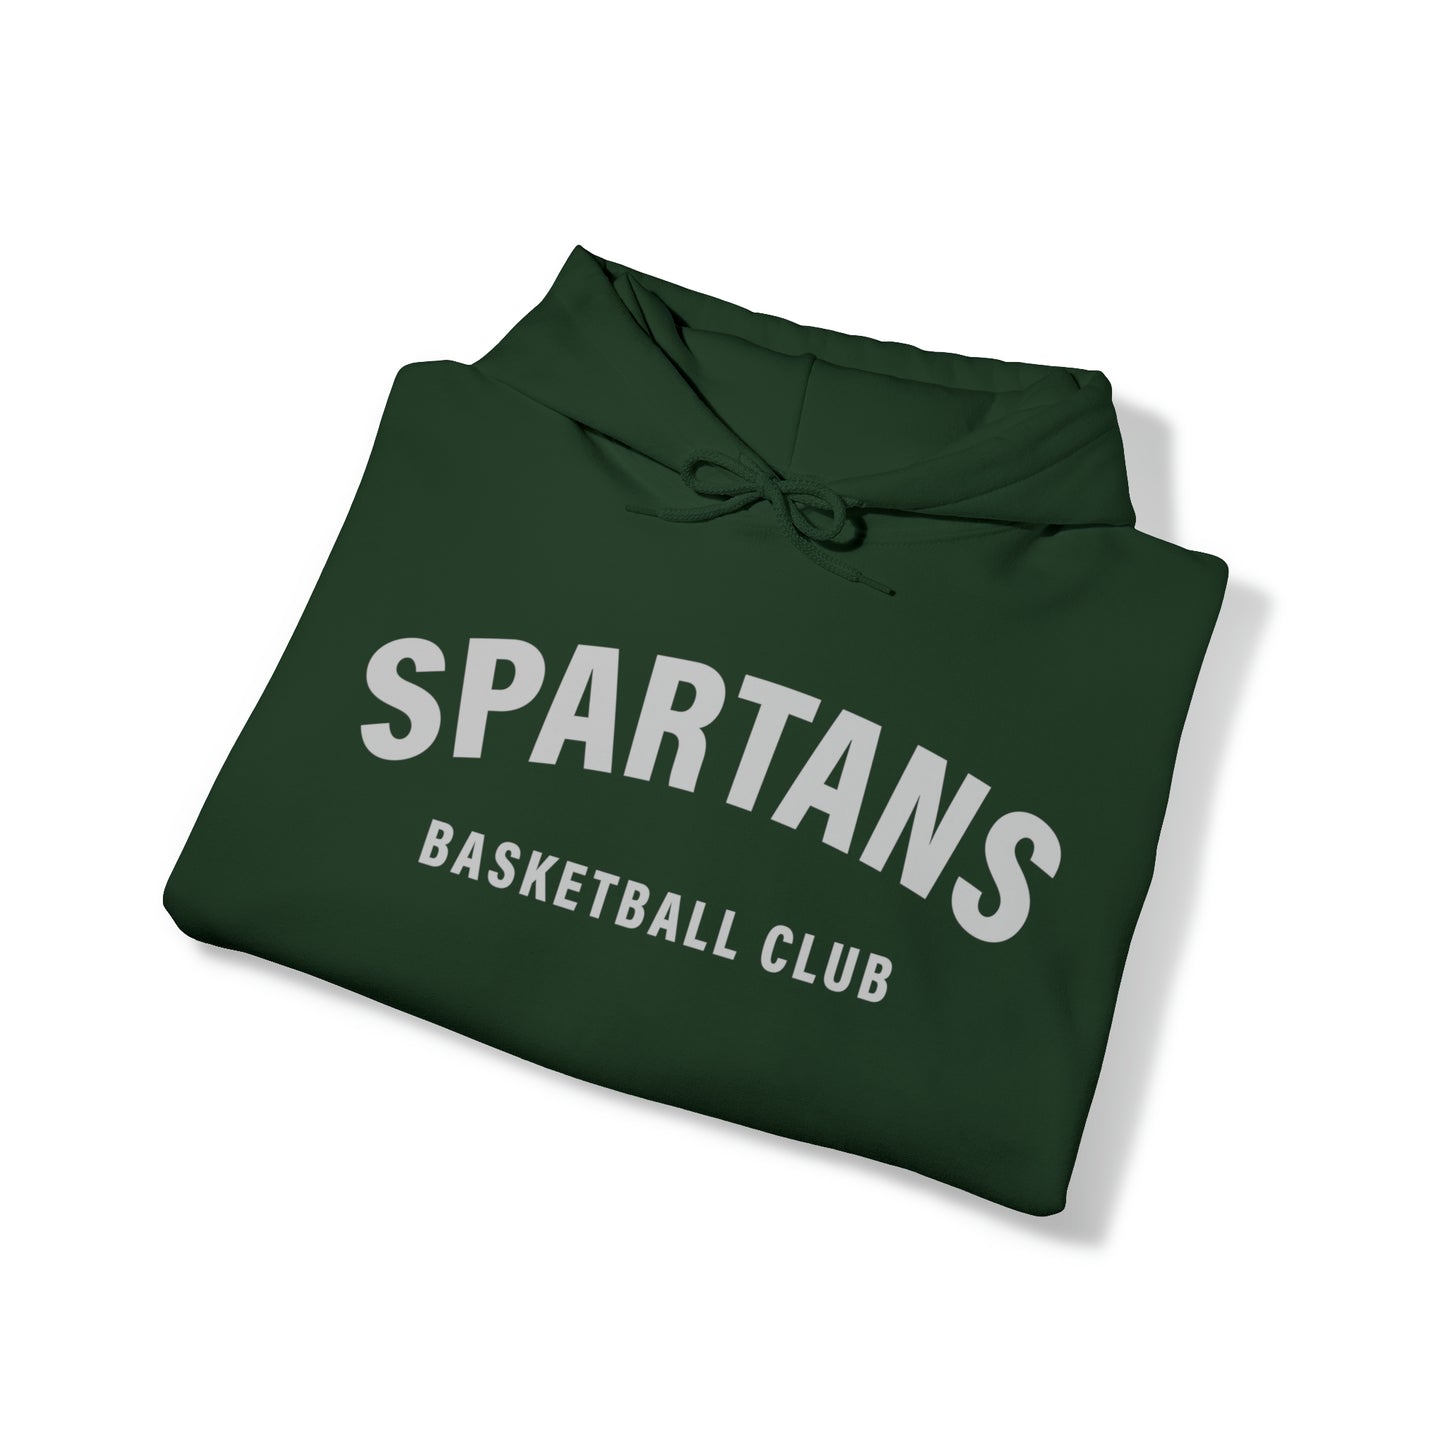 Adult Spartans Basketball Club Hoodie